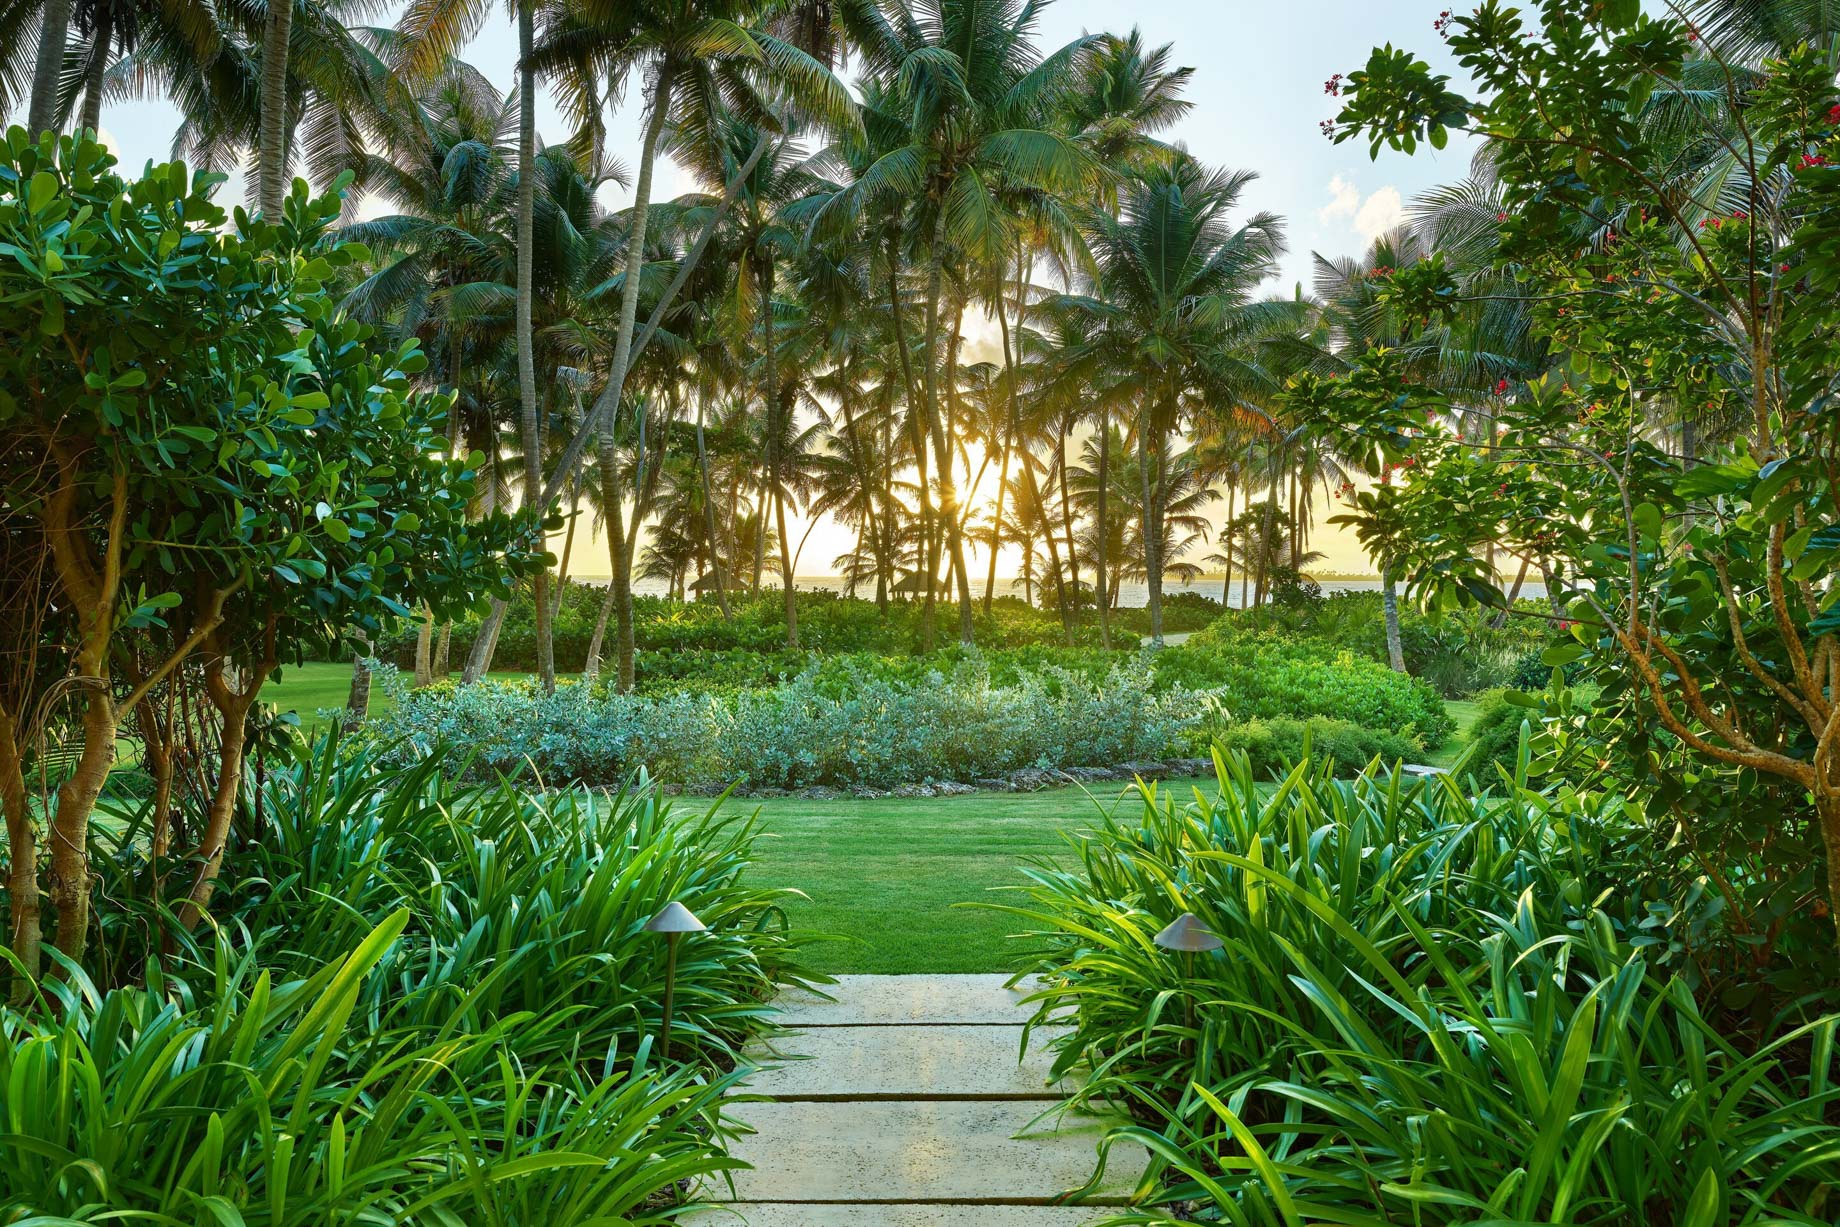 The St. Regis Bahia Beach Resort – Rio Grande, Puerto Rico – Guest Room Garden View